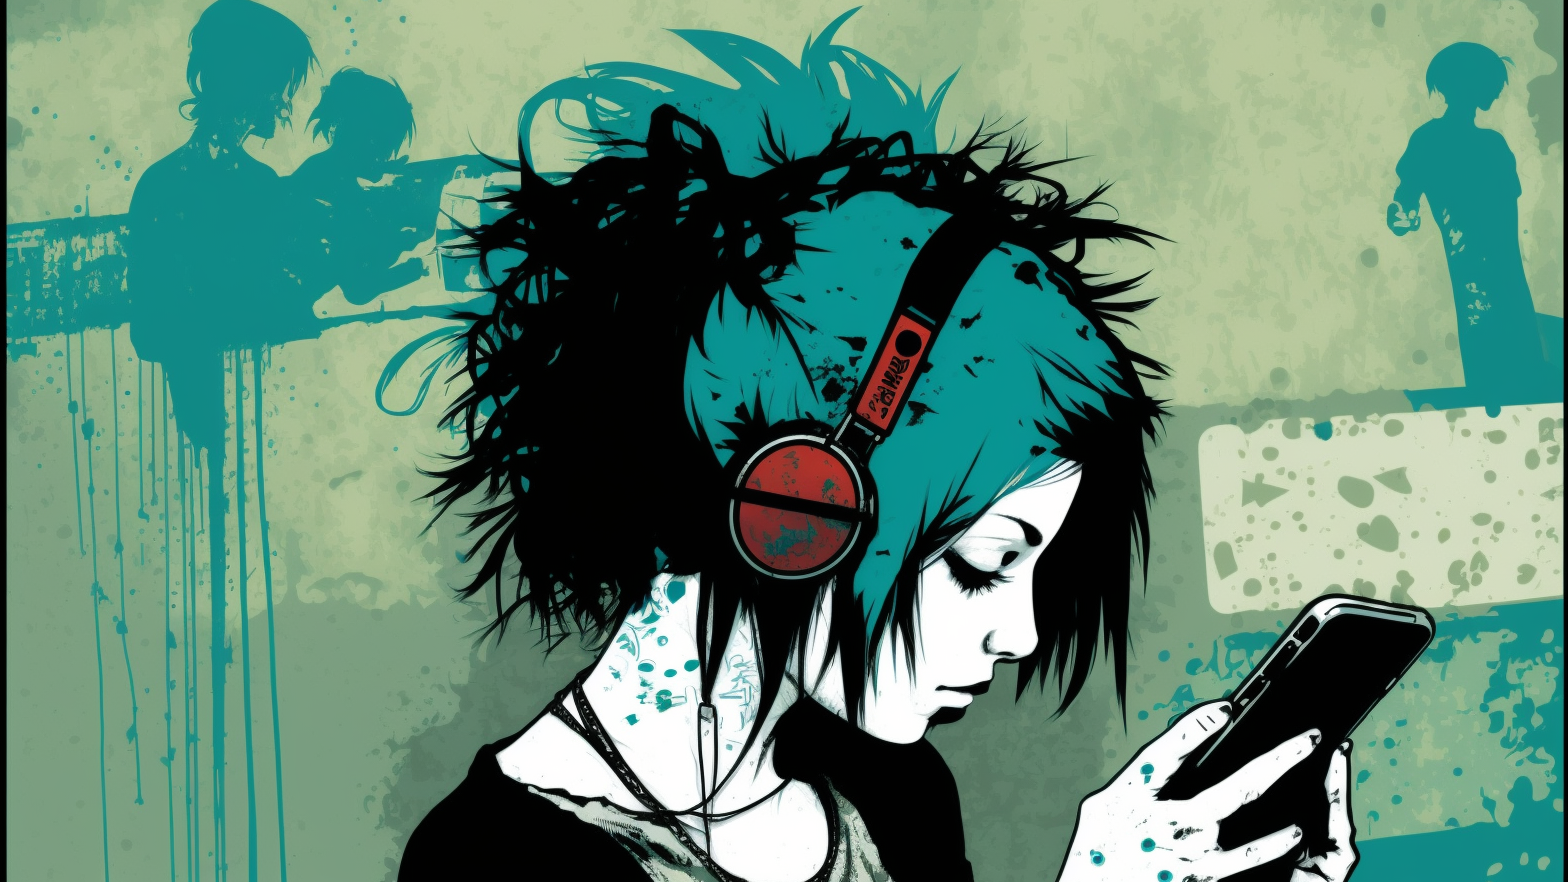 Emo Girl Listening To Music